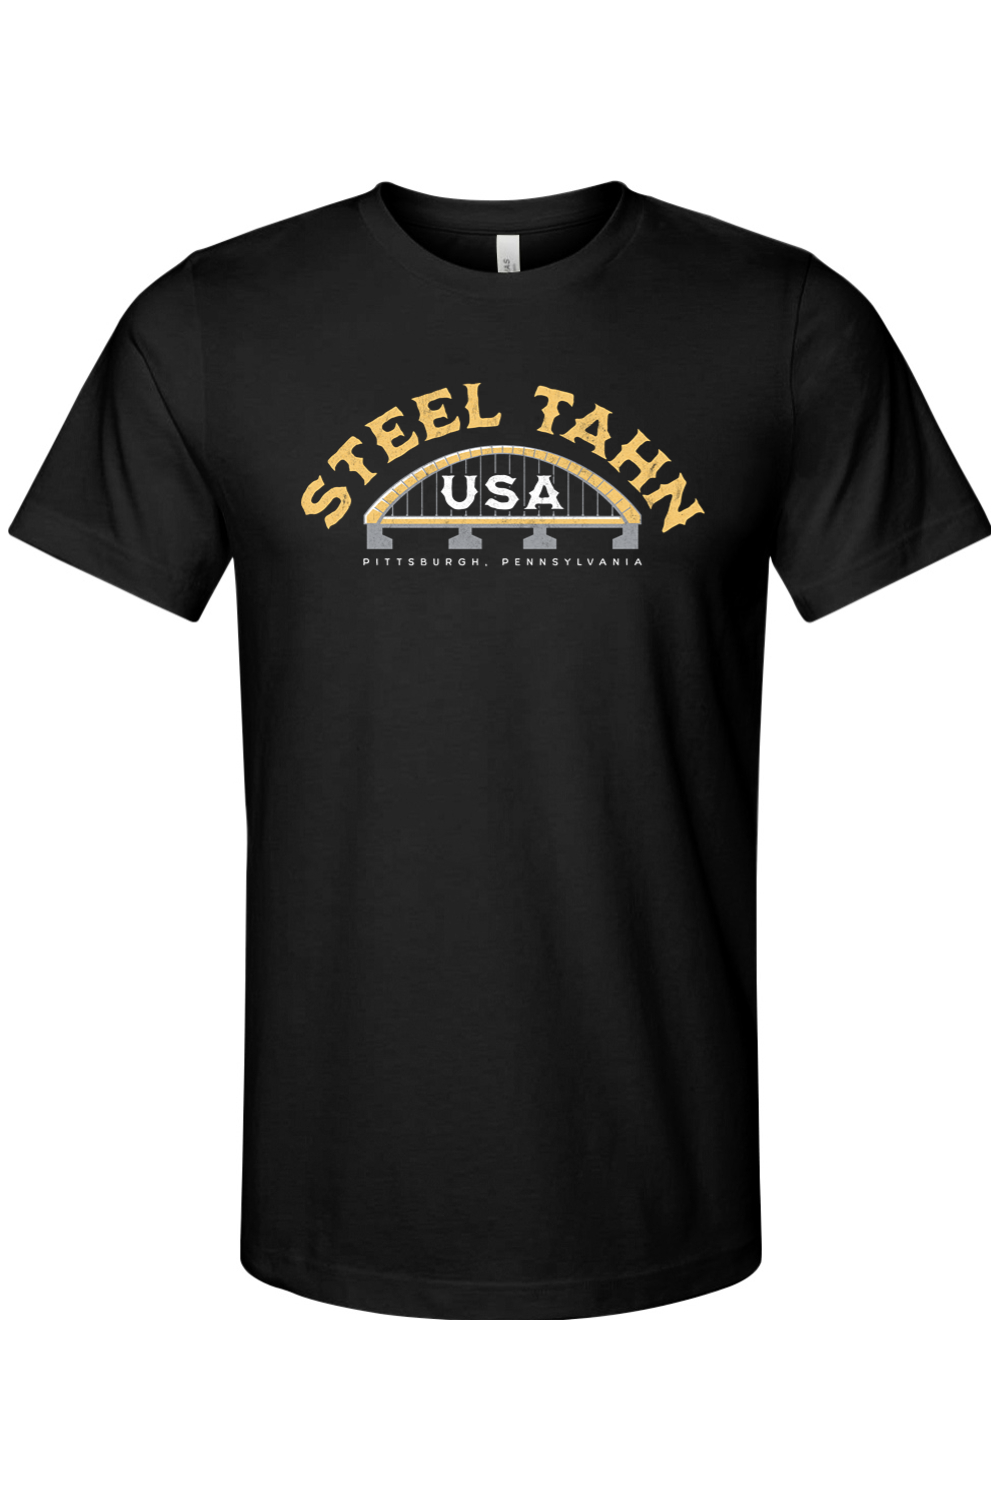 Steel Tahn USA - Yinzylvania